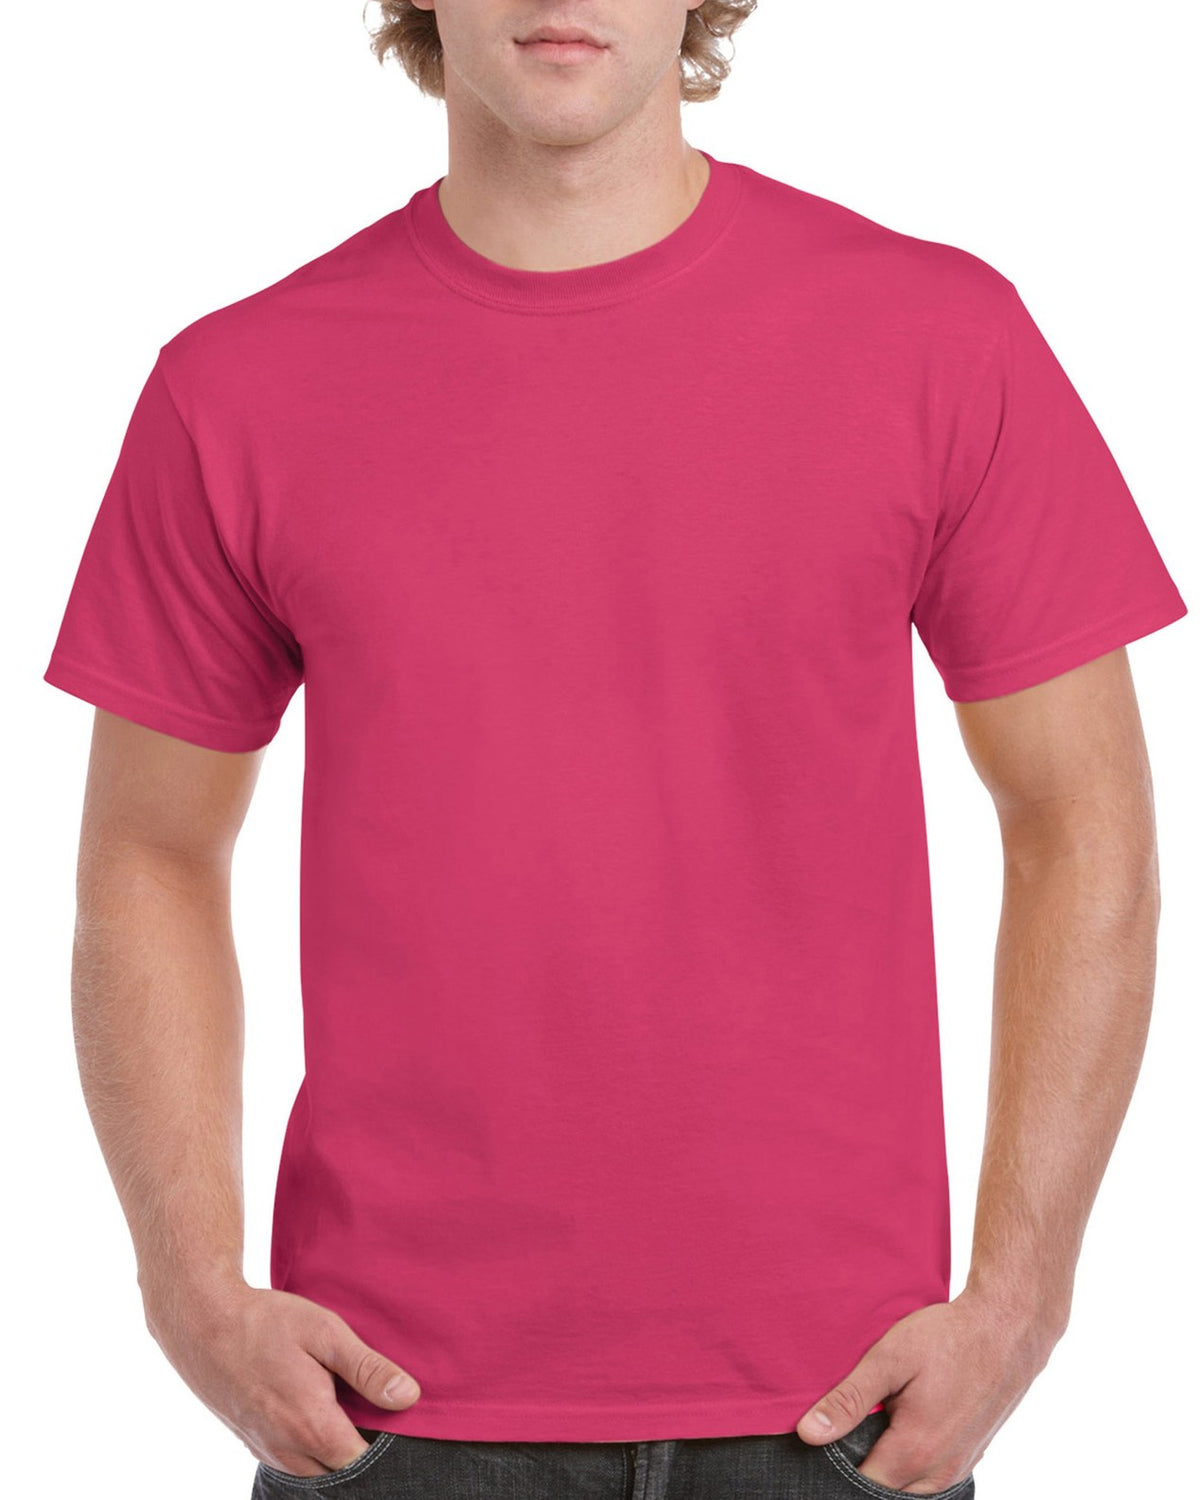 Blank tshirts 100% cotton jersey knit Cotton Adult unisex Short Sleeve  T-Shirt tee shirt